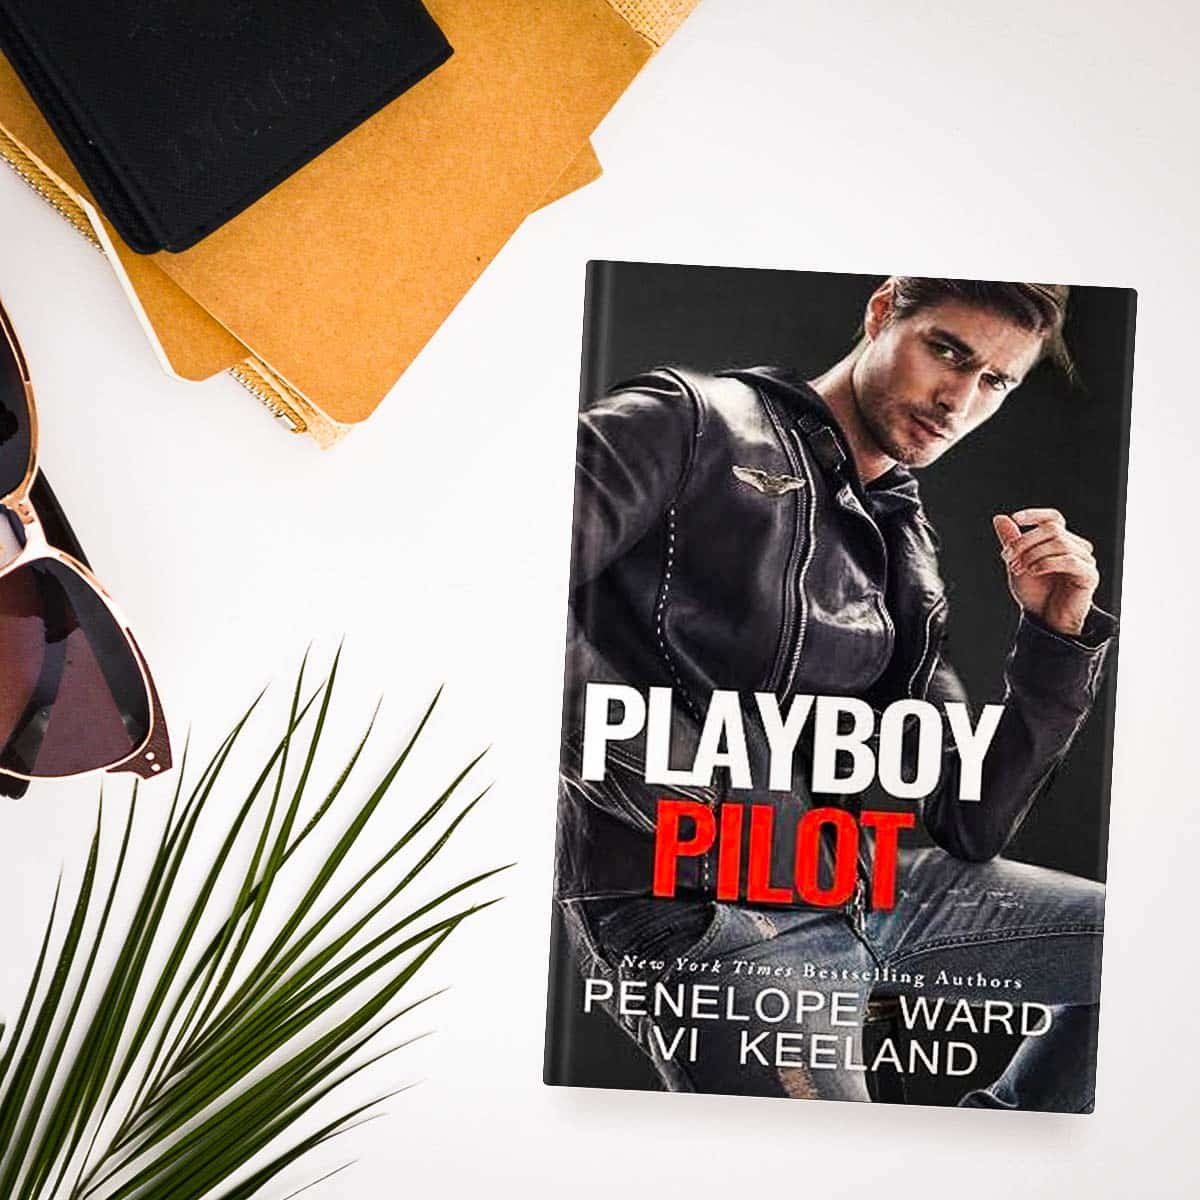 Playboy Pilot by Penelope Ward and Vi Keeland – Vacation Romance